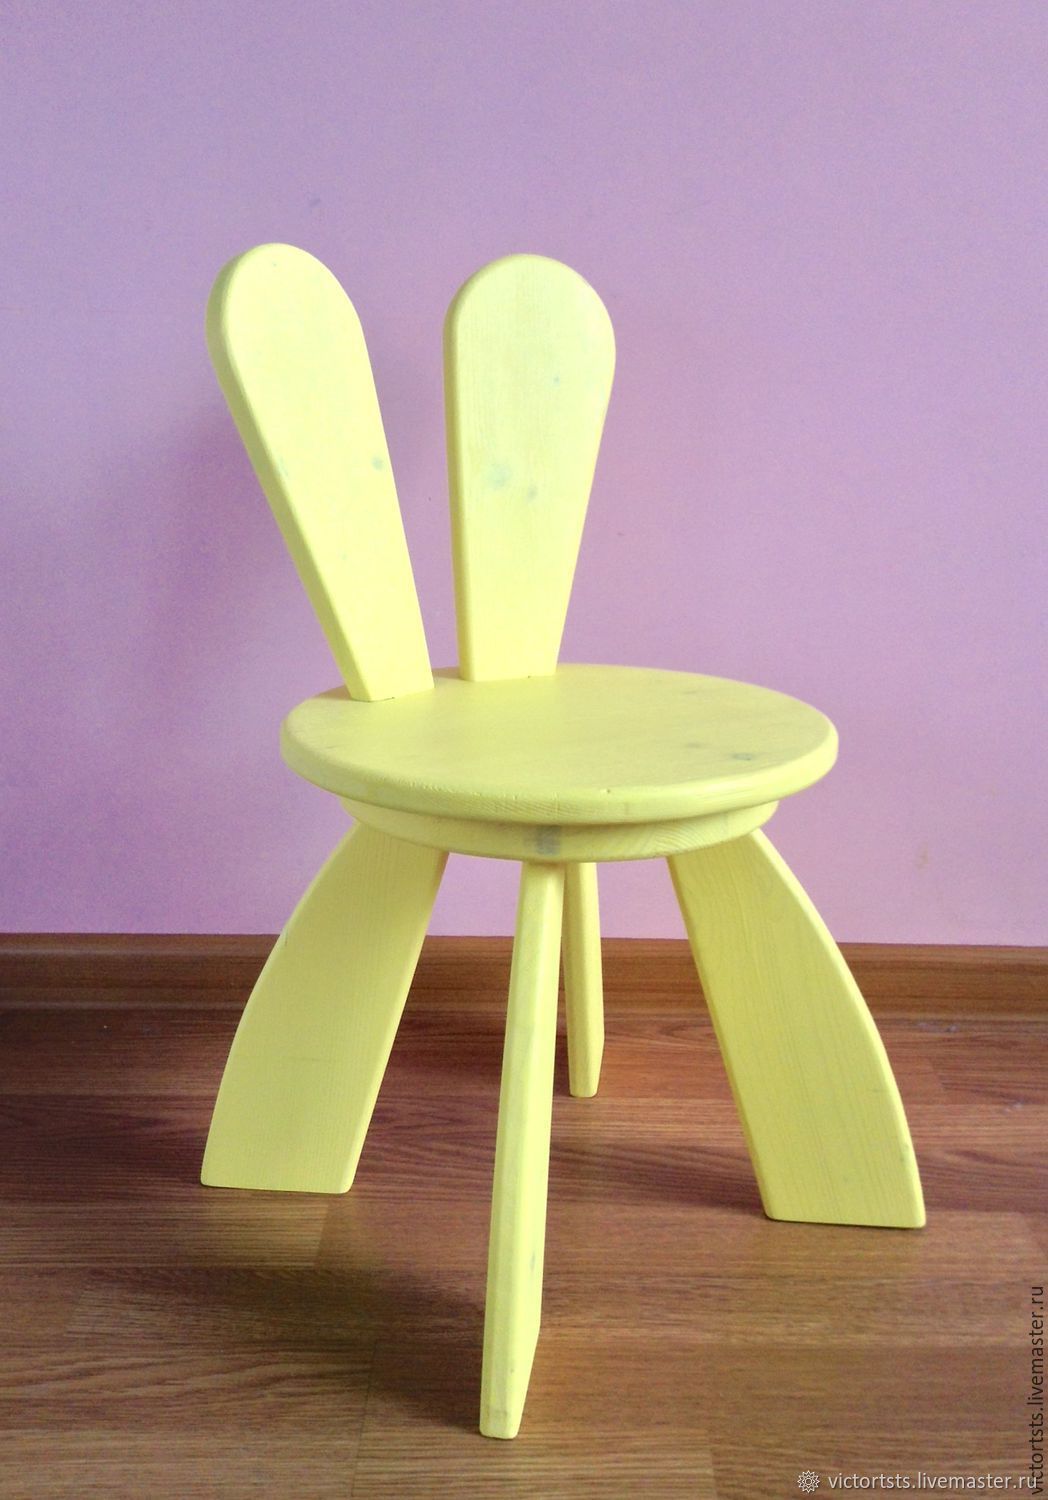 детский стол и стул зайчик